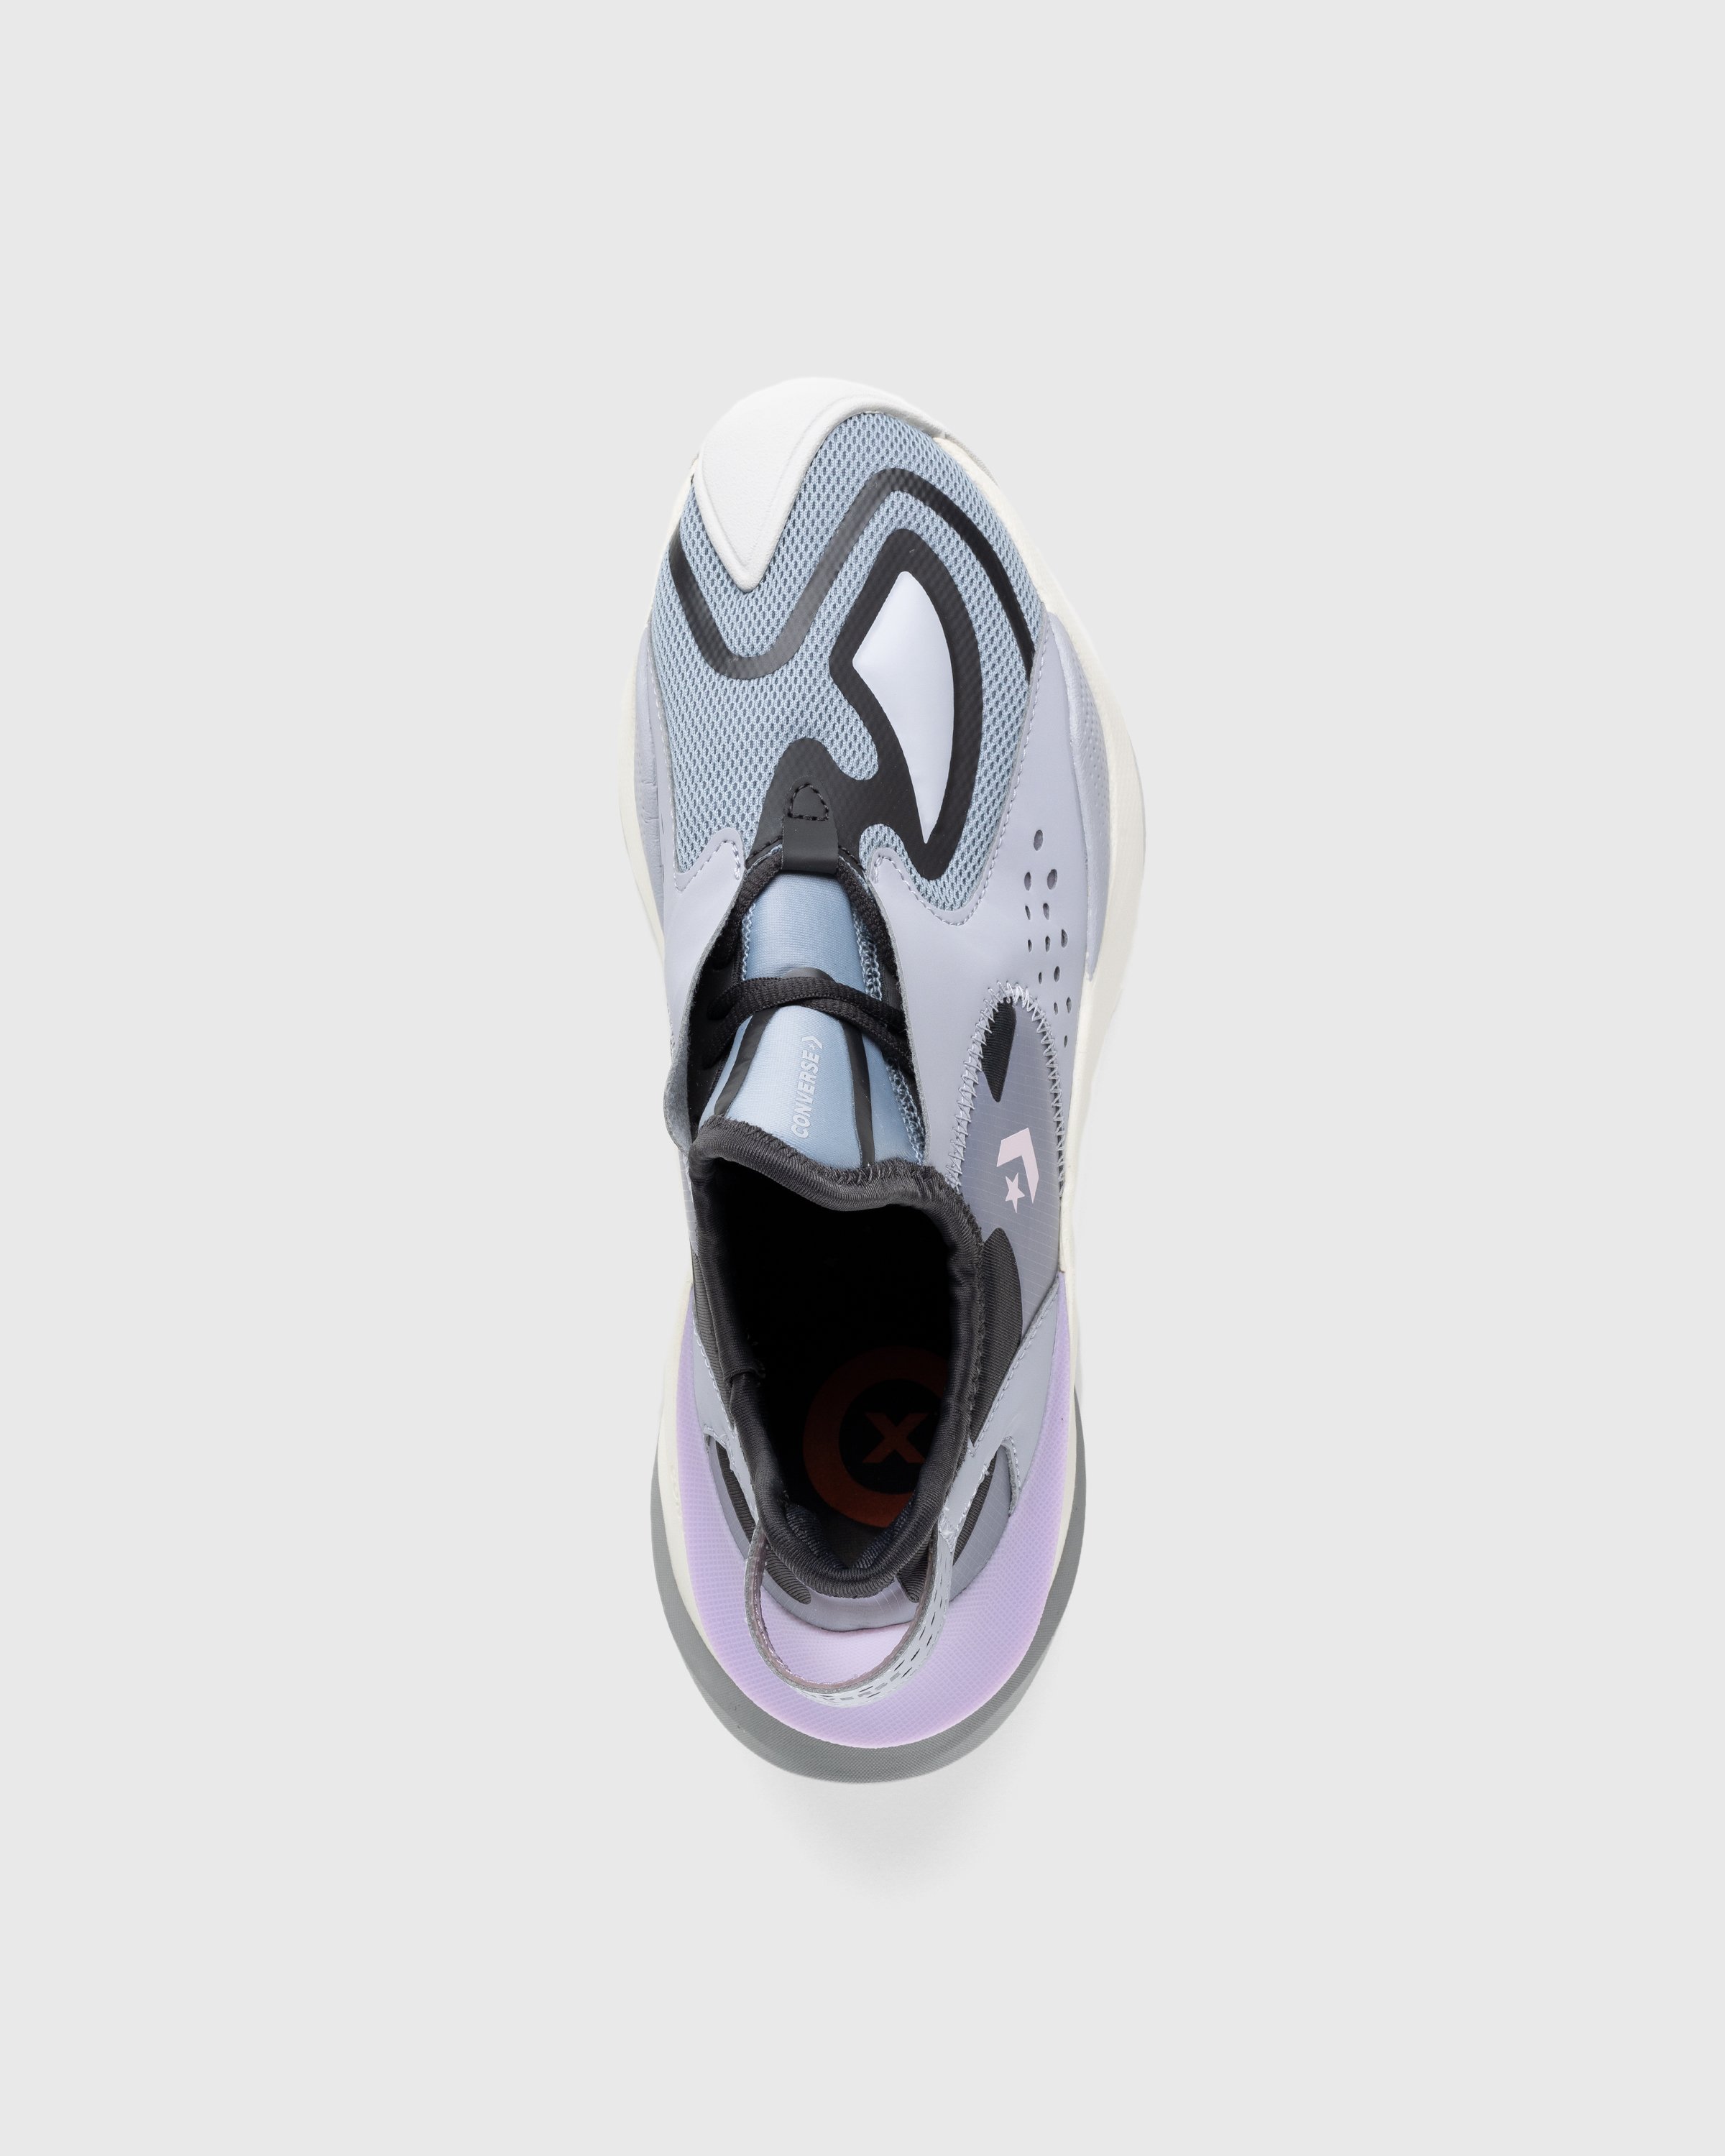 Converse - Aeon Active Cx Ox Obsidian Mist - Footwear - Grey - Image 5